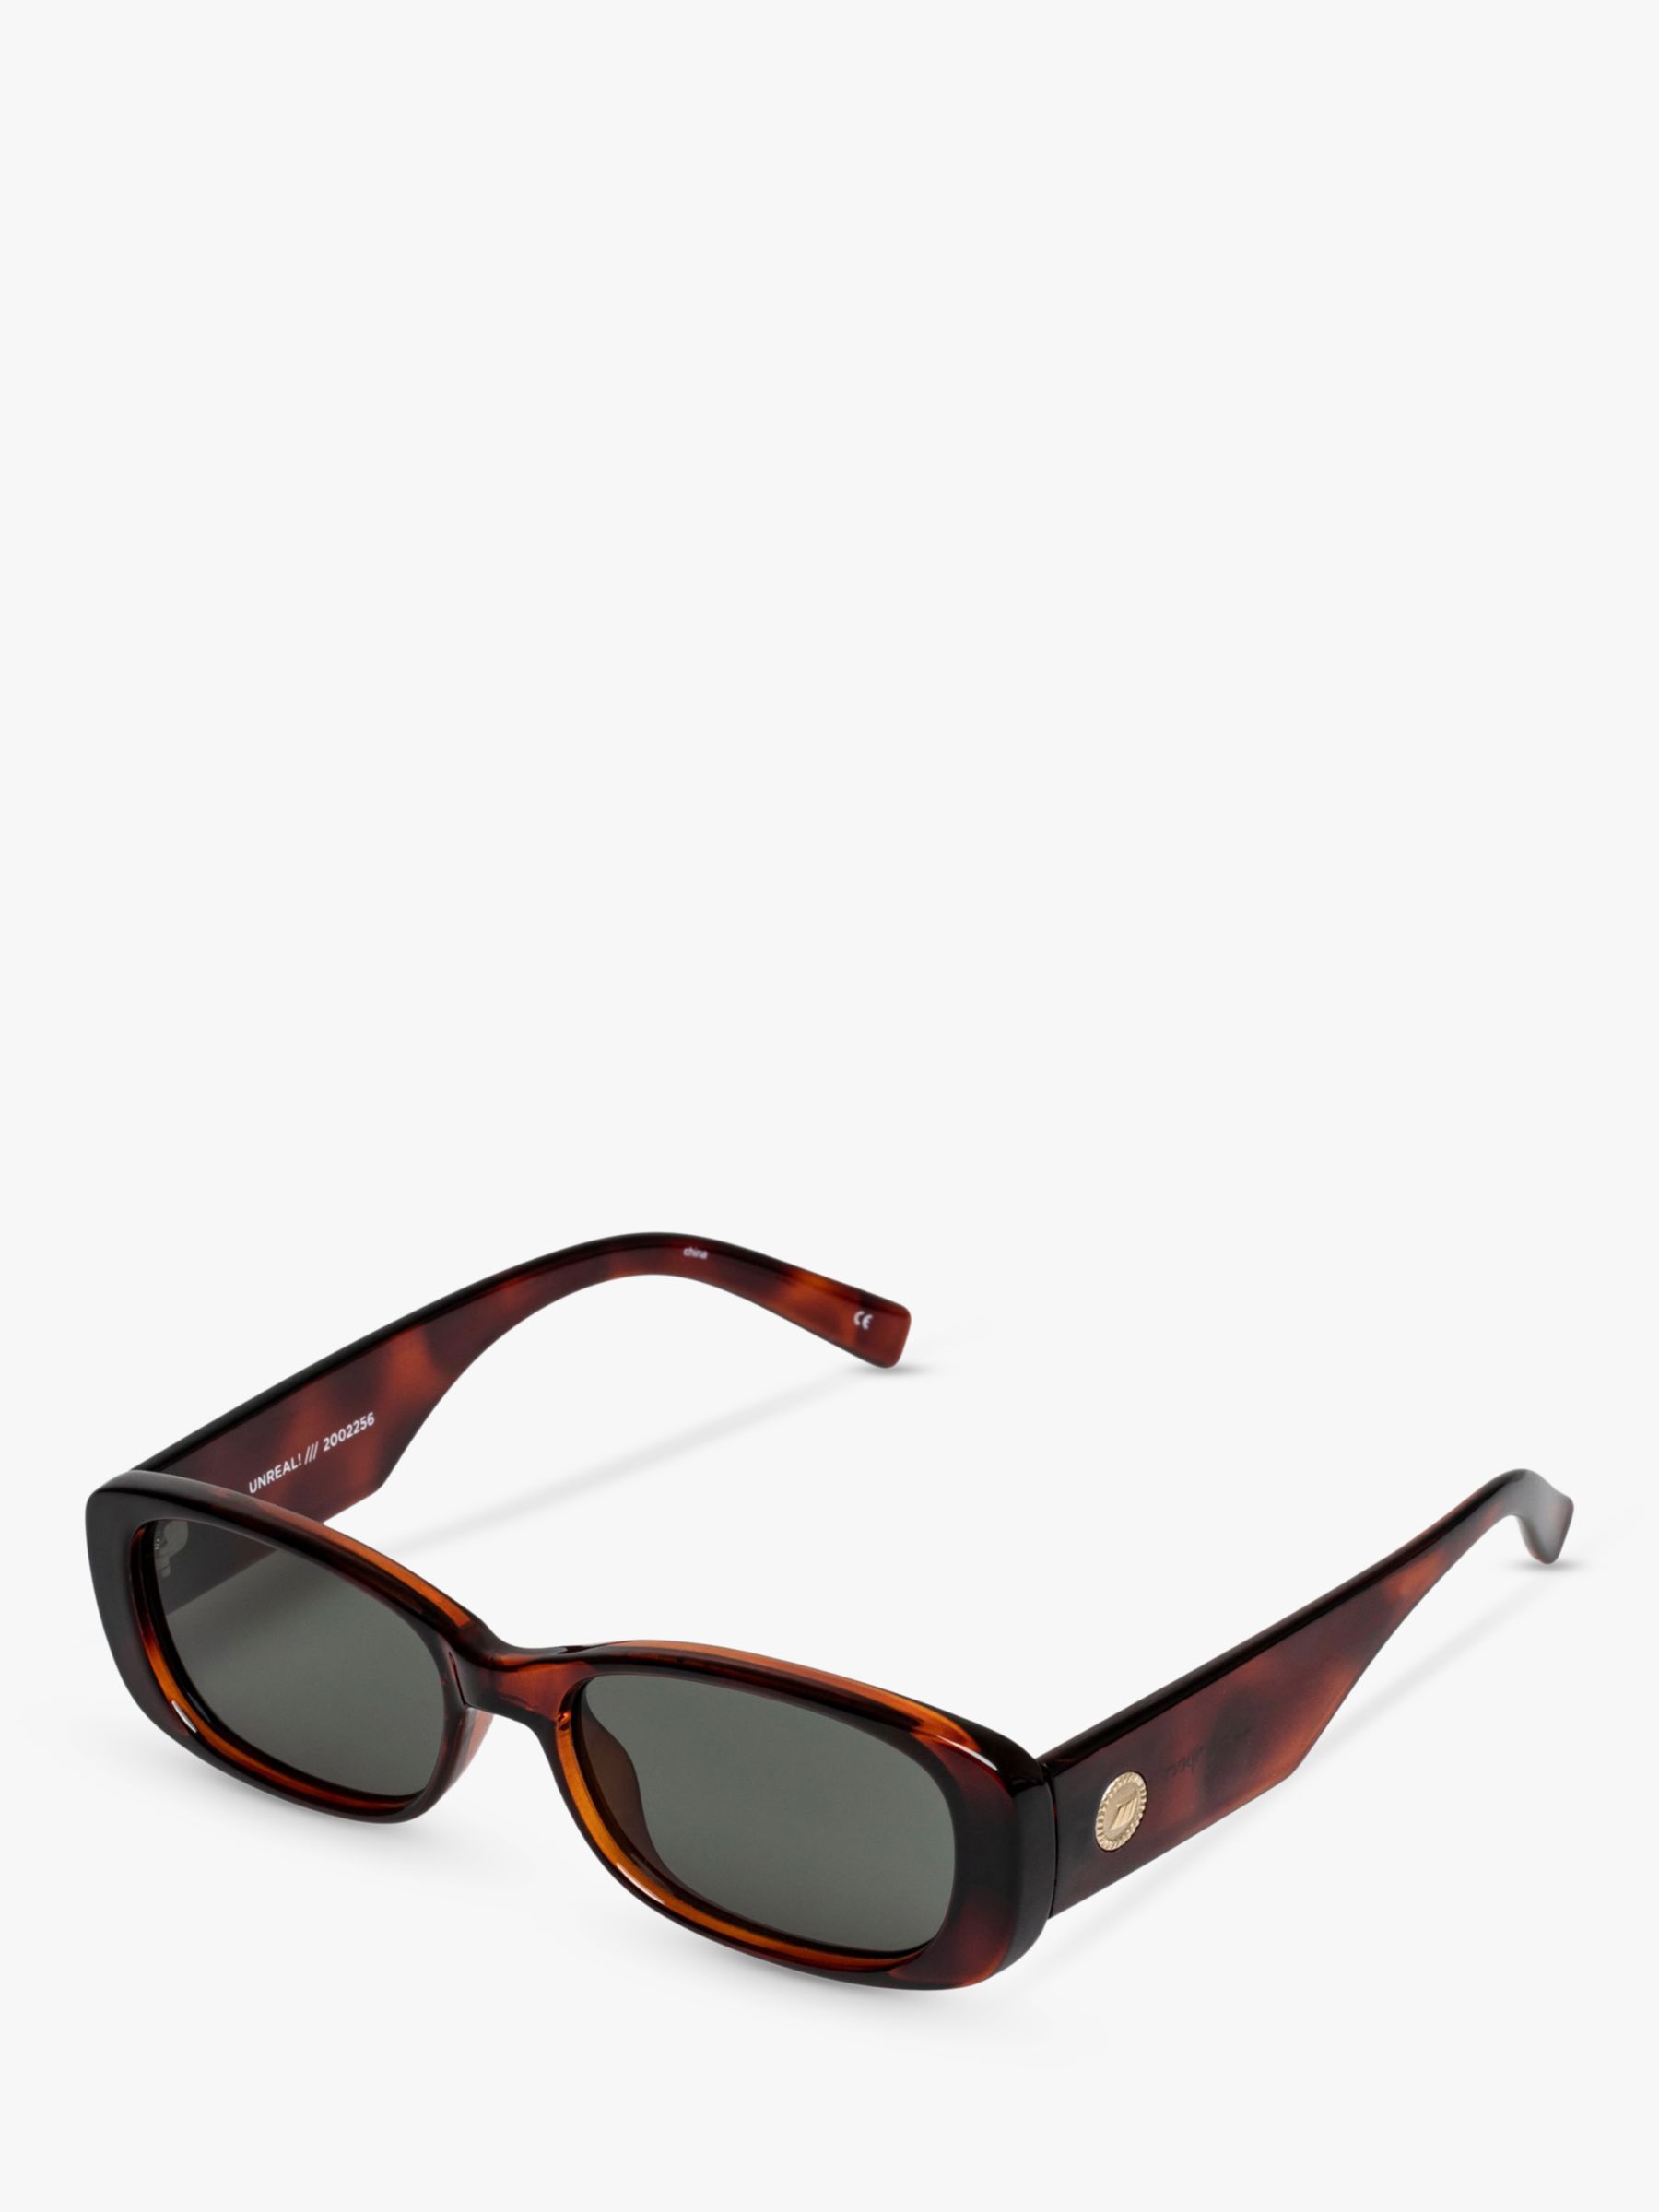 Le Specs Women's Unreal Rectangular Sunglasses, Tortoise/Green L5000164